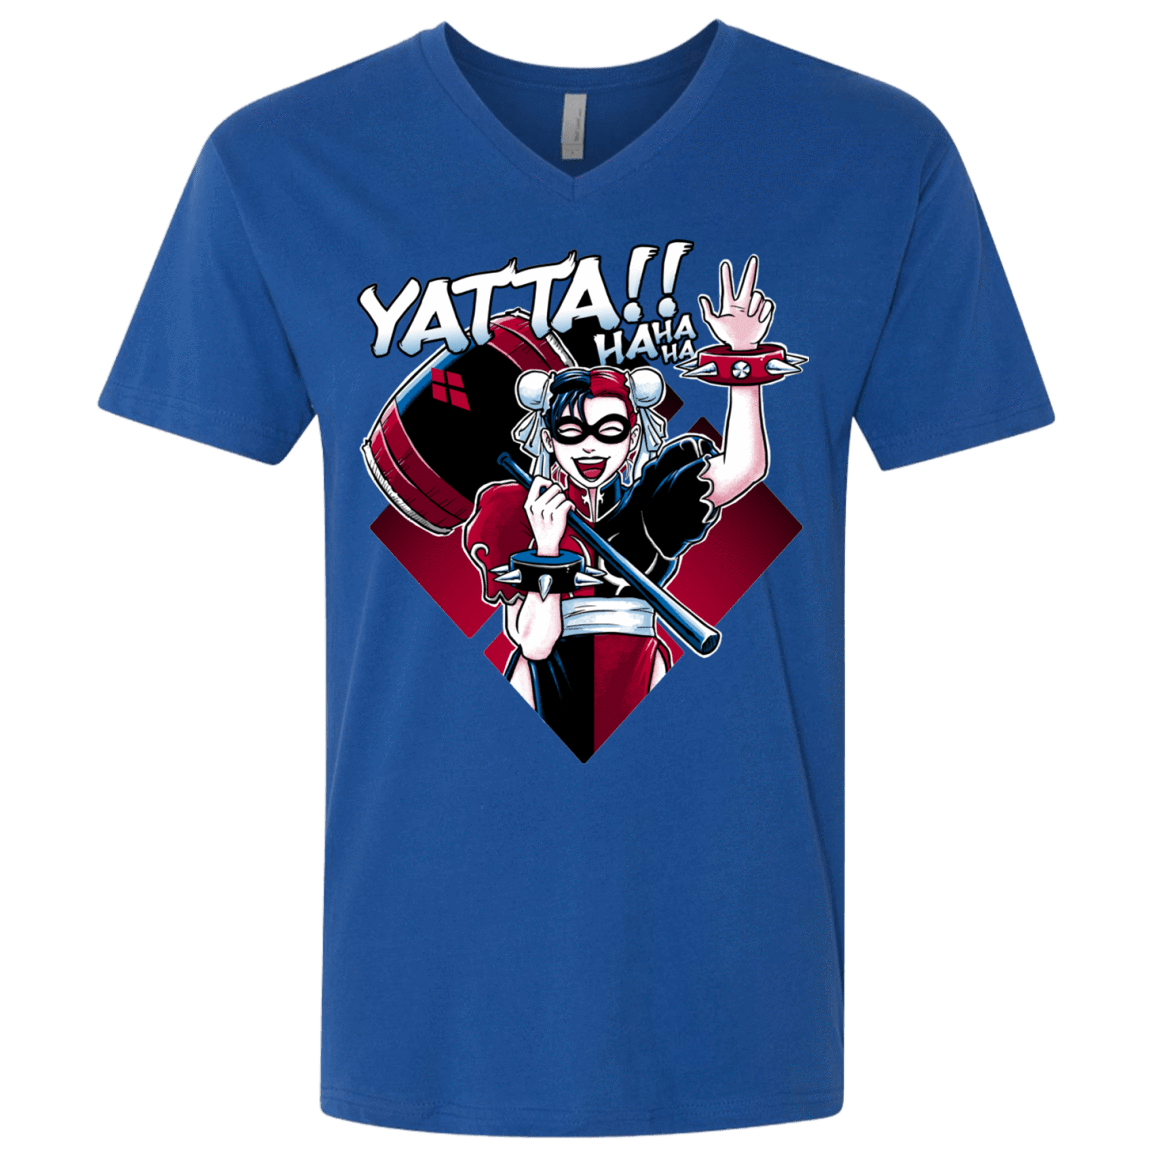 T-Shirts Royal / X-Small Harley Yatta Men's Premium V-Neck